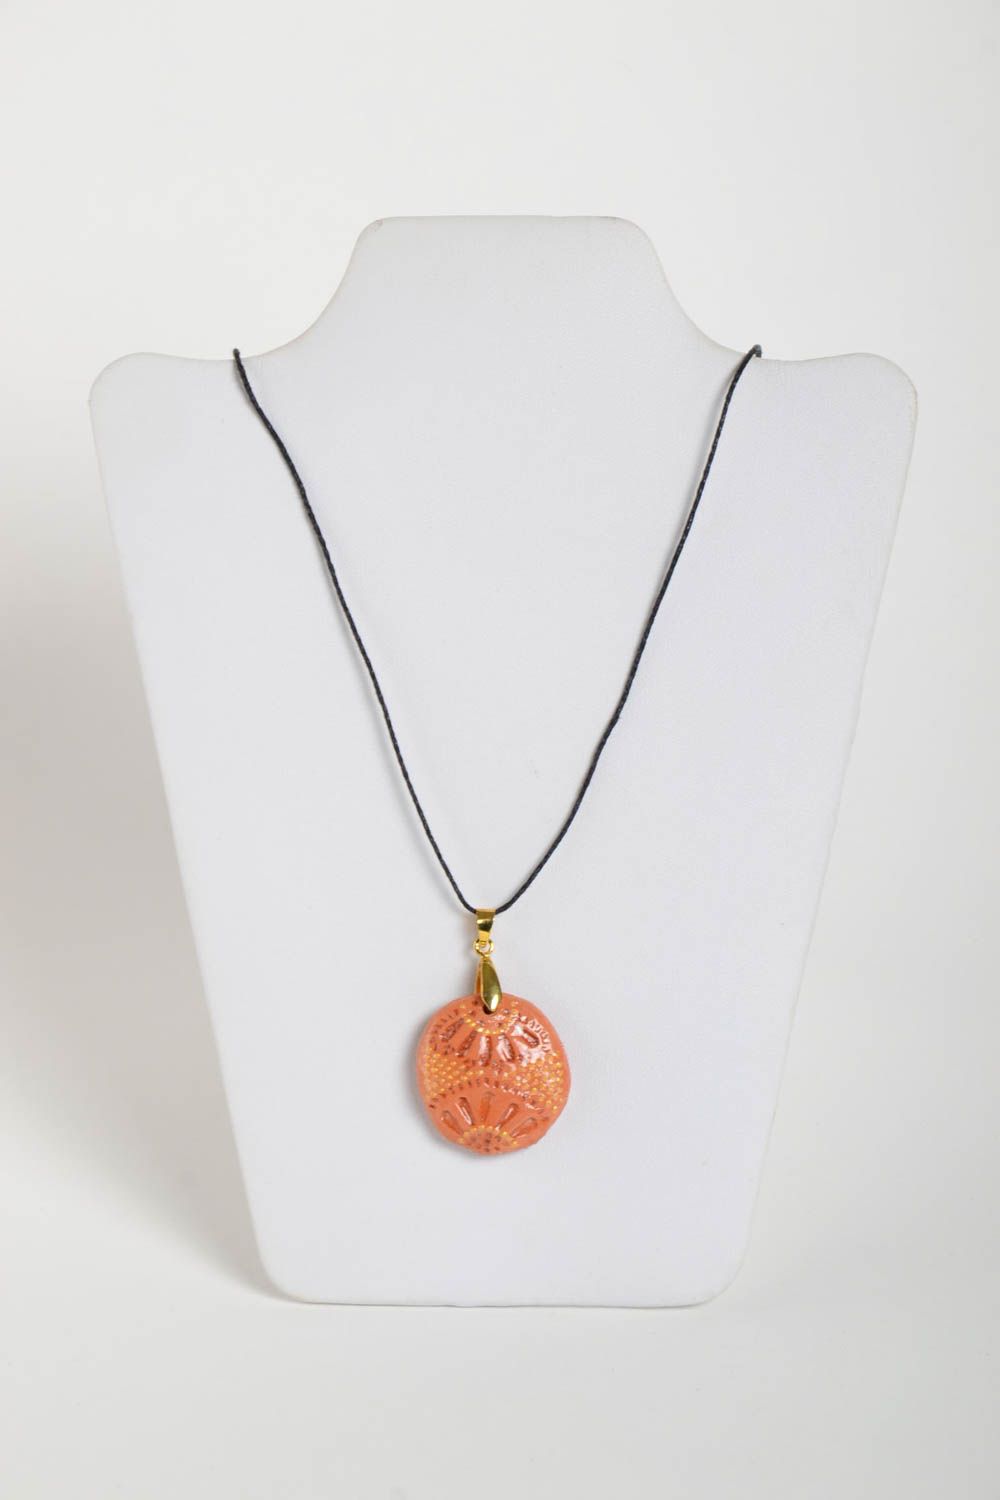 Handmade pendant unusual accessory clay jewelry gift ideas beautiful pendant photo 2